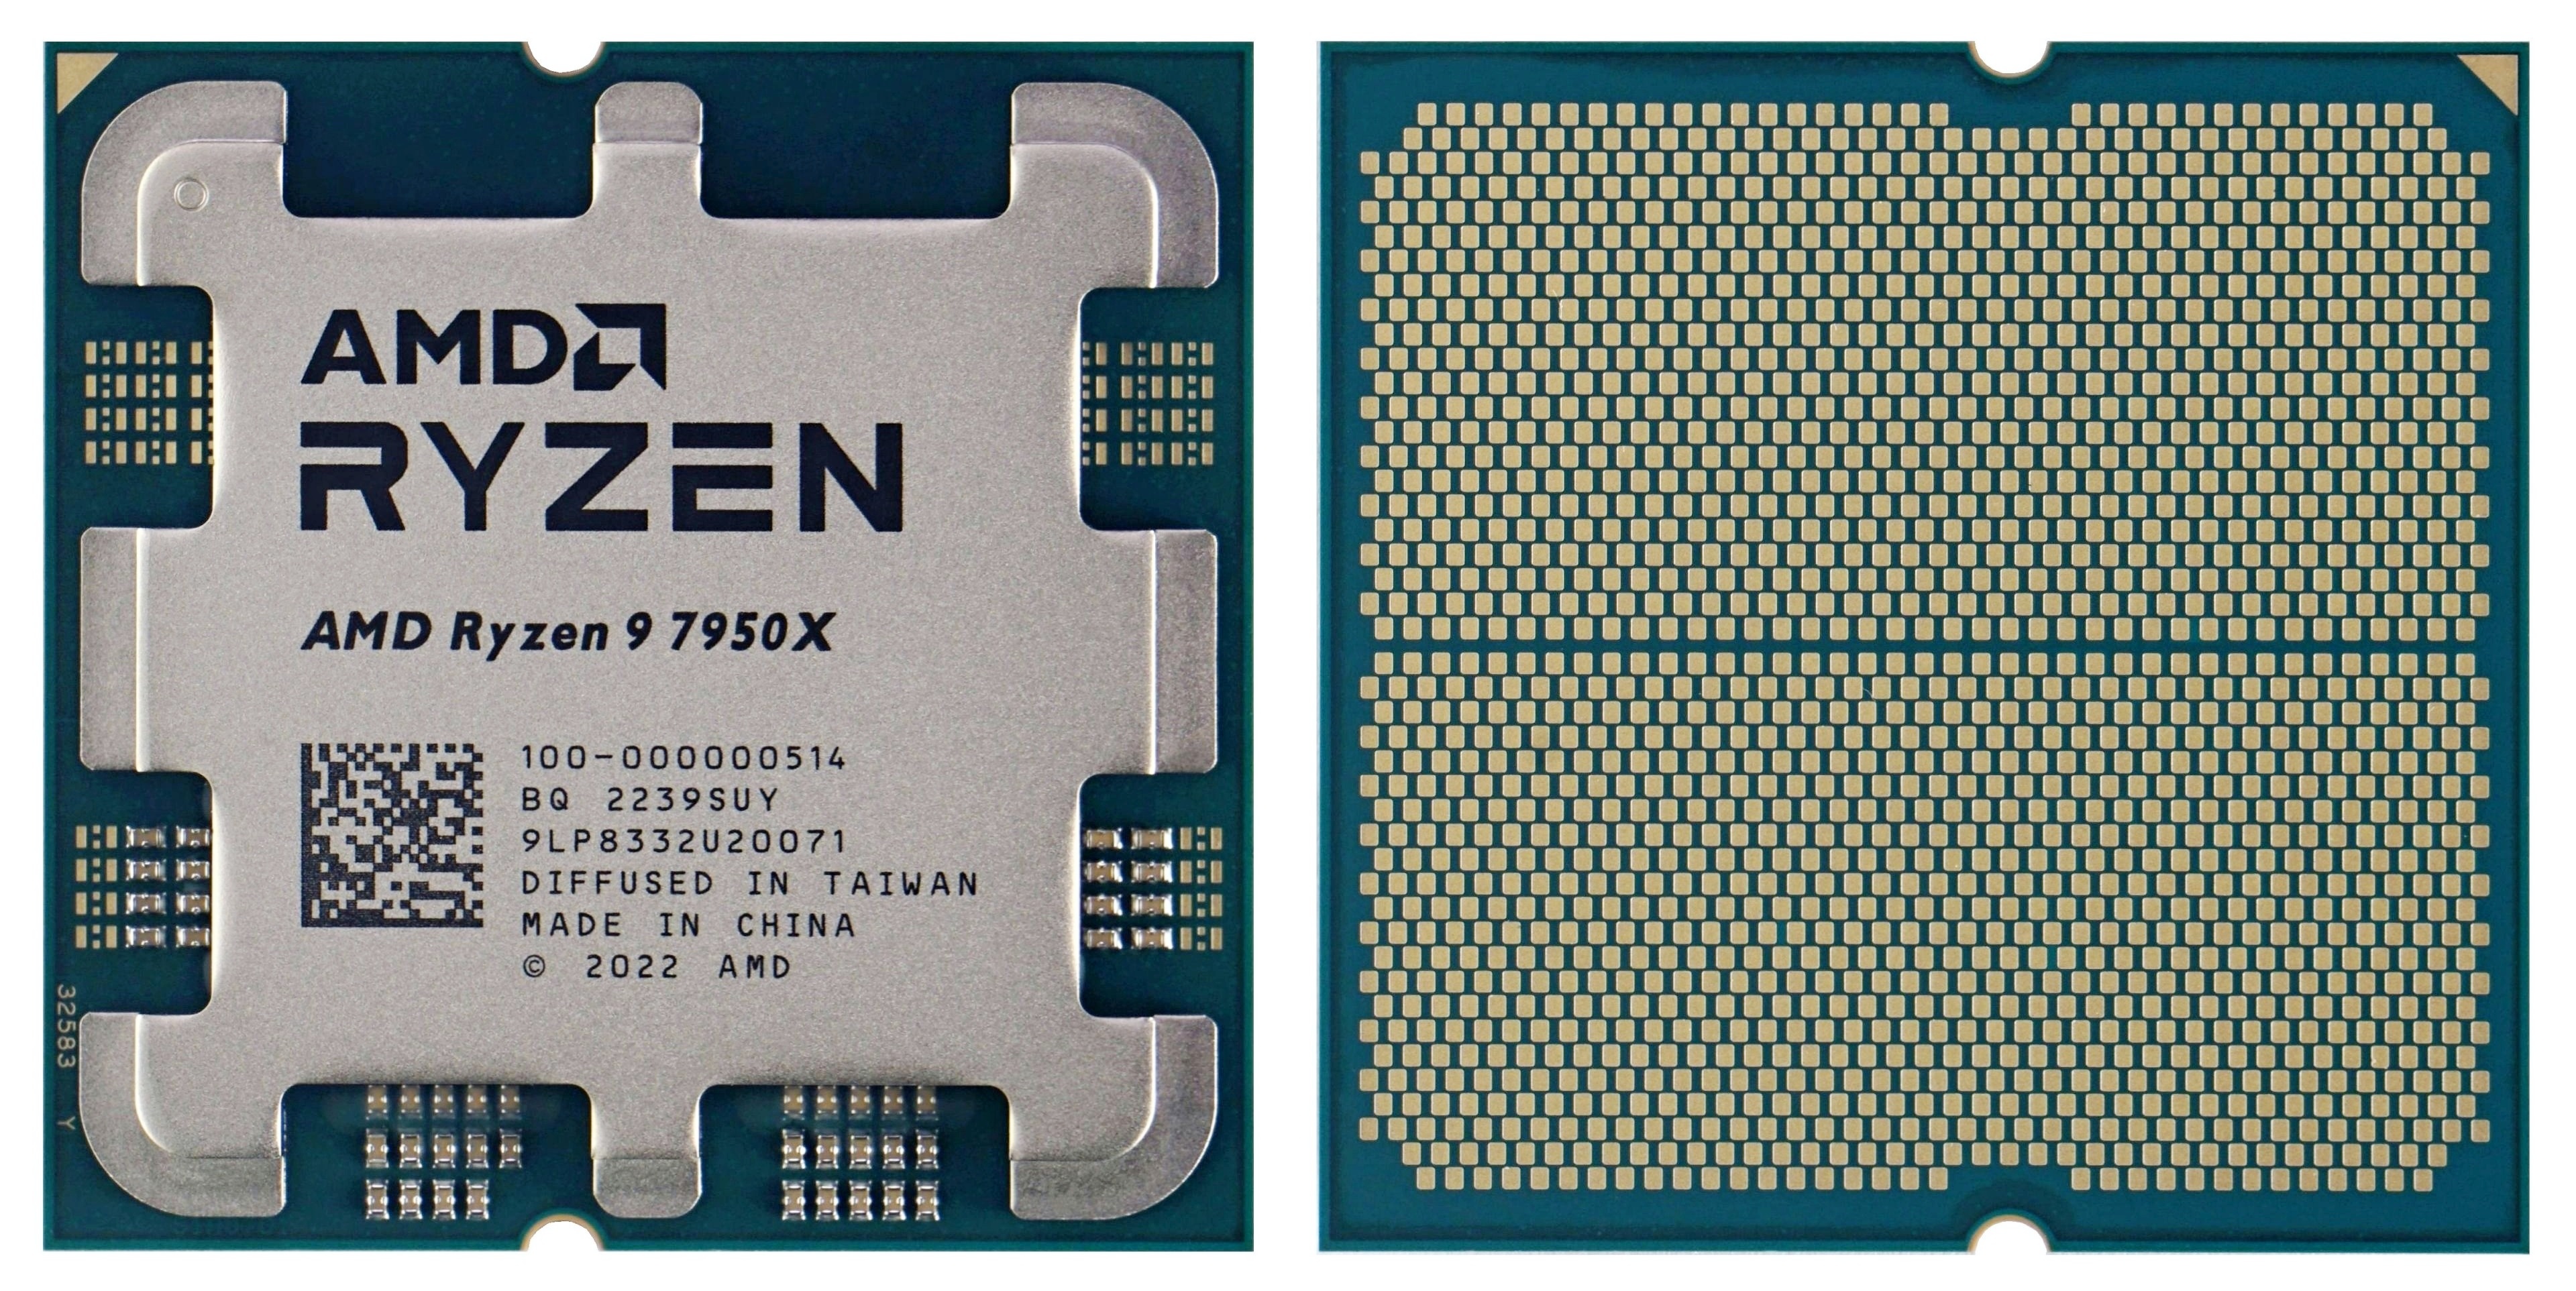 Ryzen 9 7950X AMD s elite CPU beats but also doesn t beat Core i9 